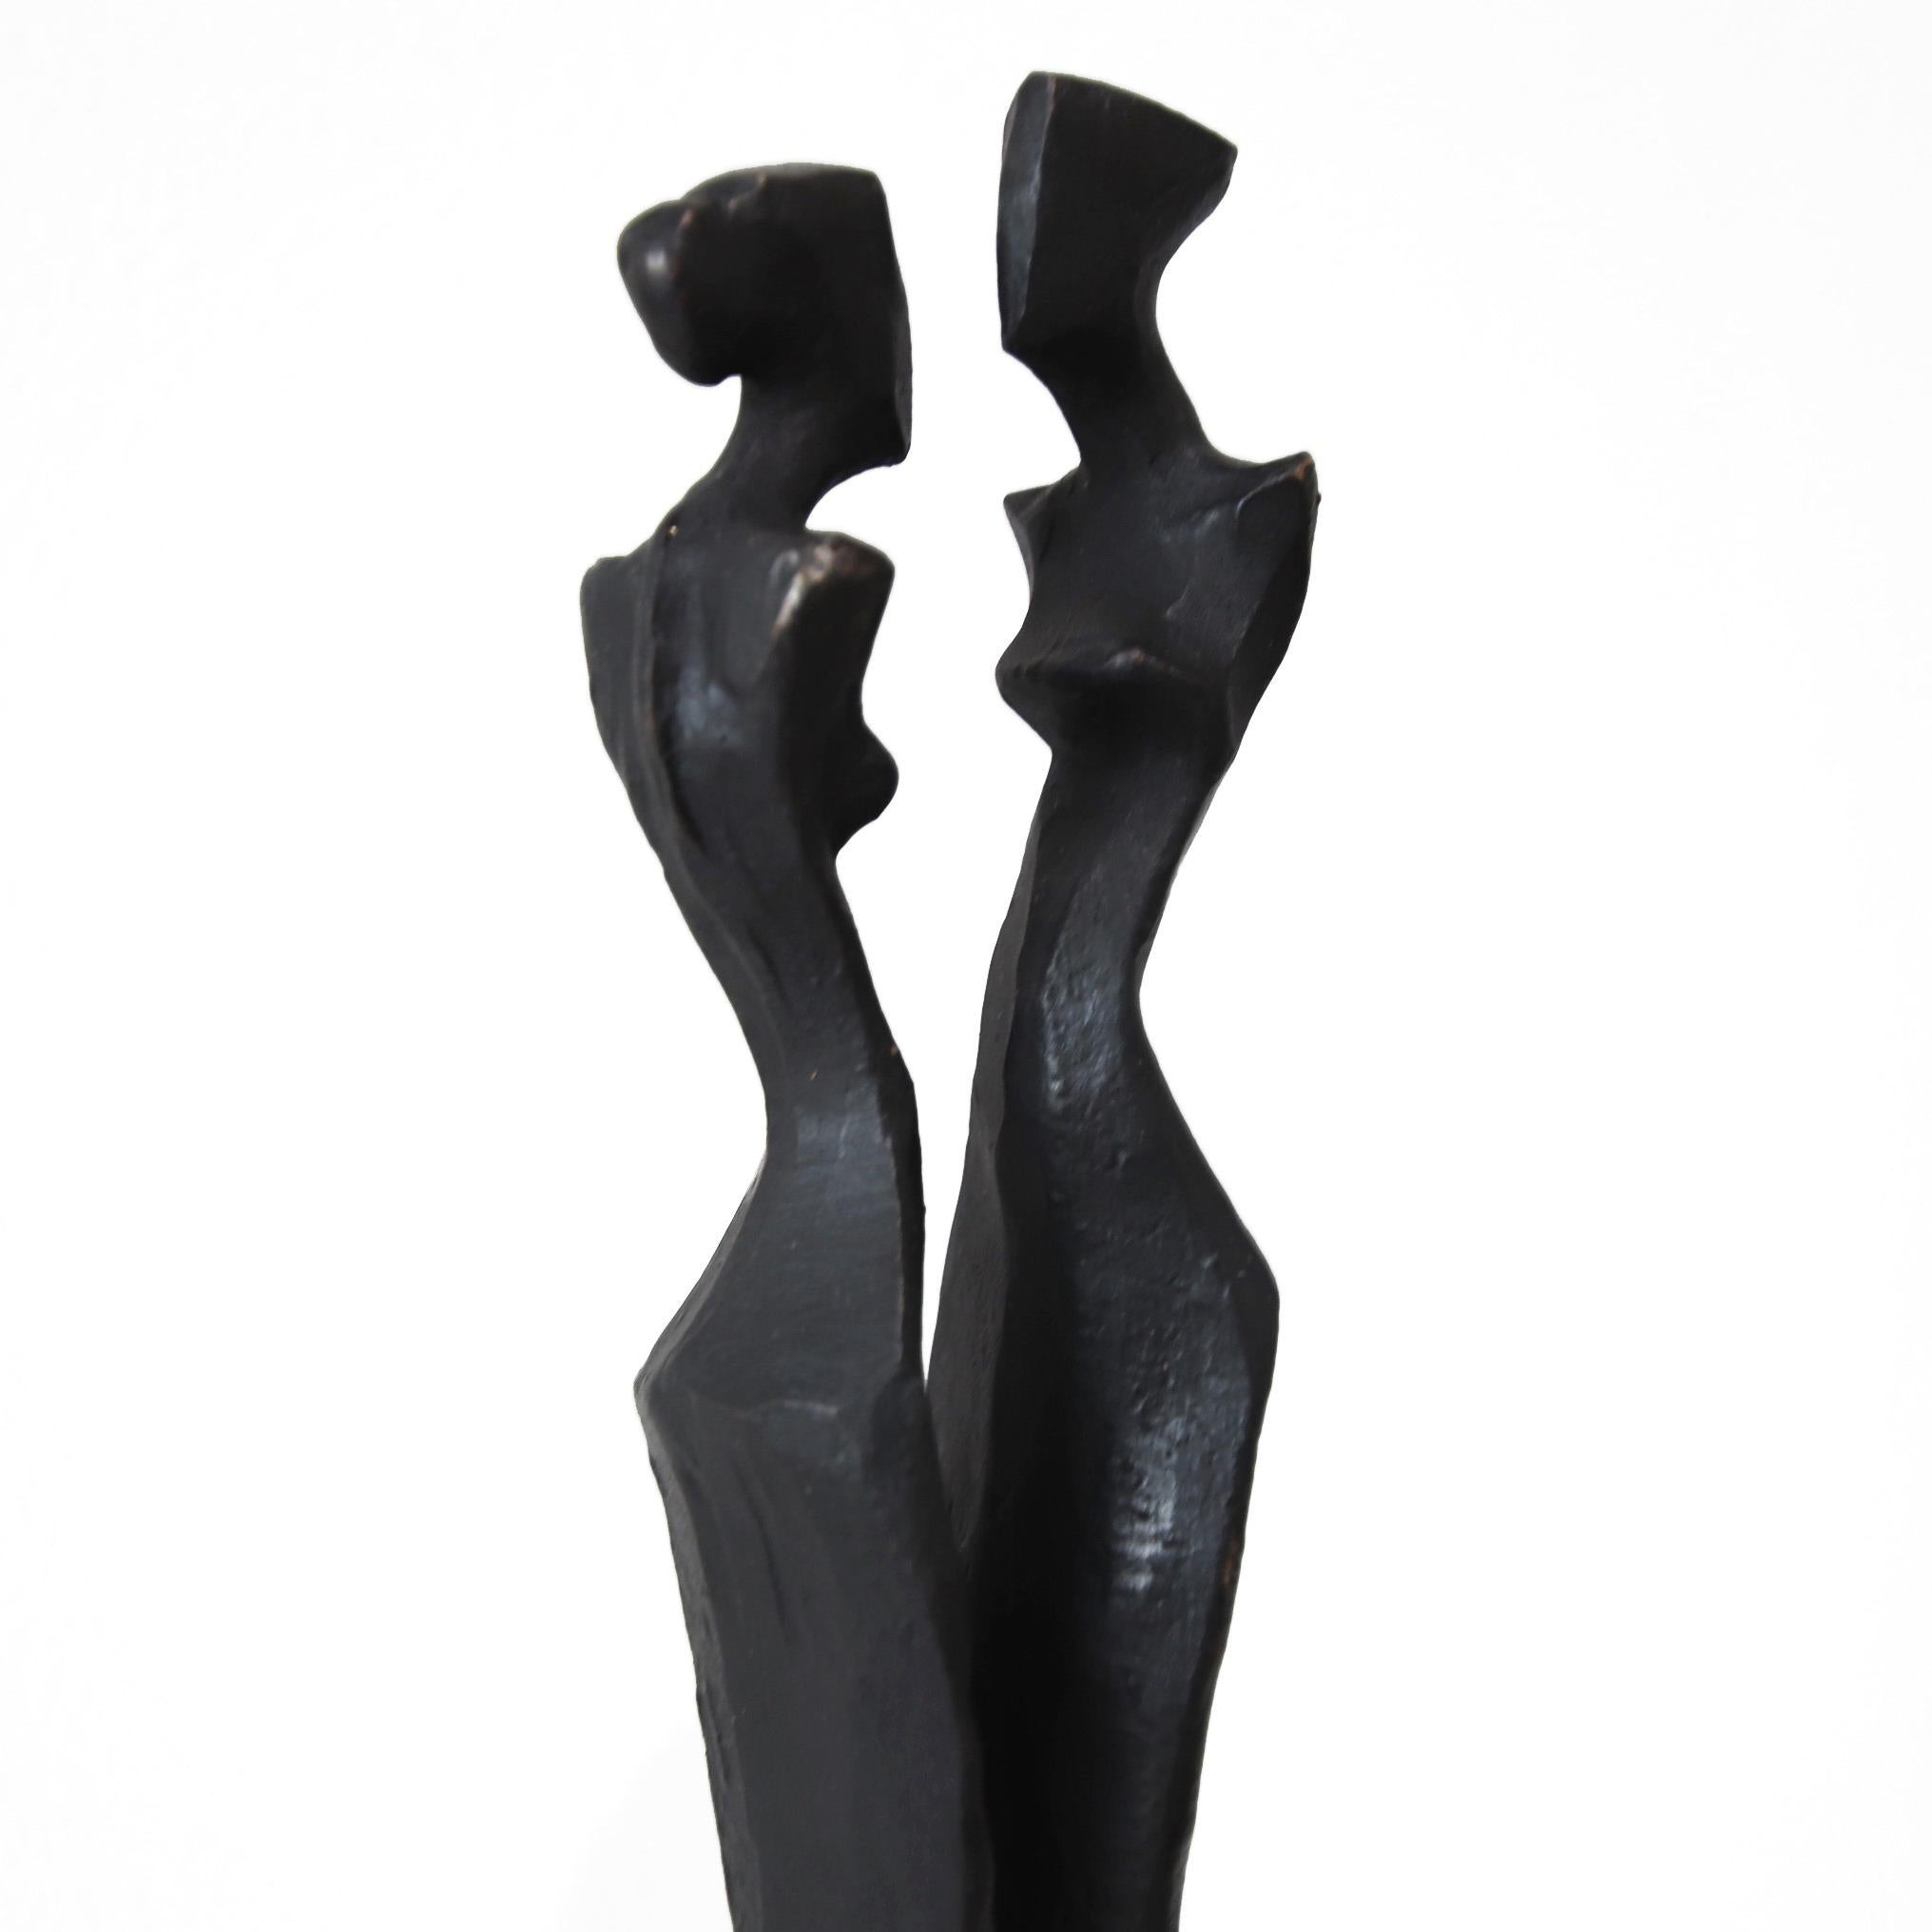 Girls - Modern Figurative Bronze Sculpture Two Girls Friends Family For Sale 9